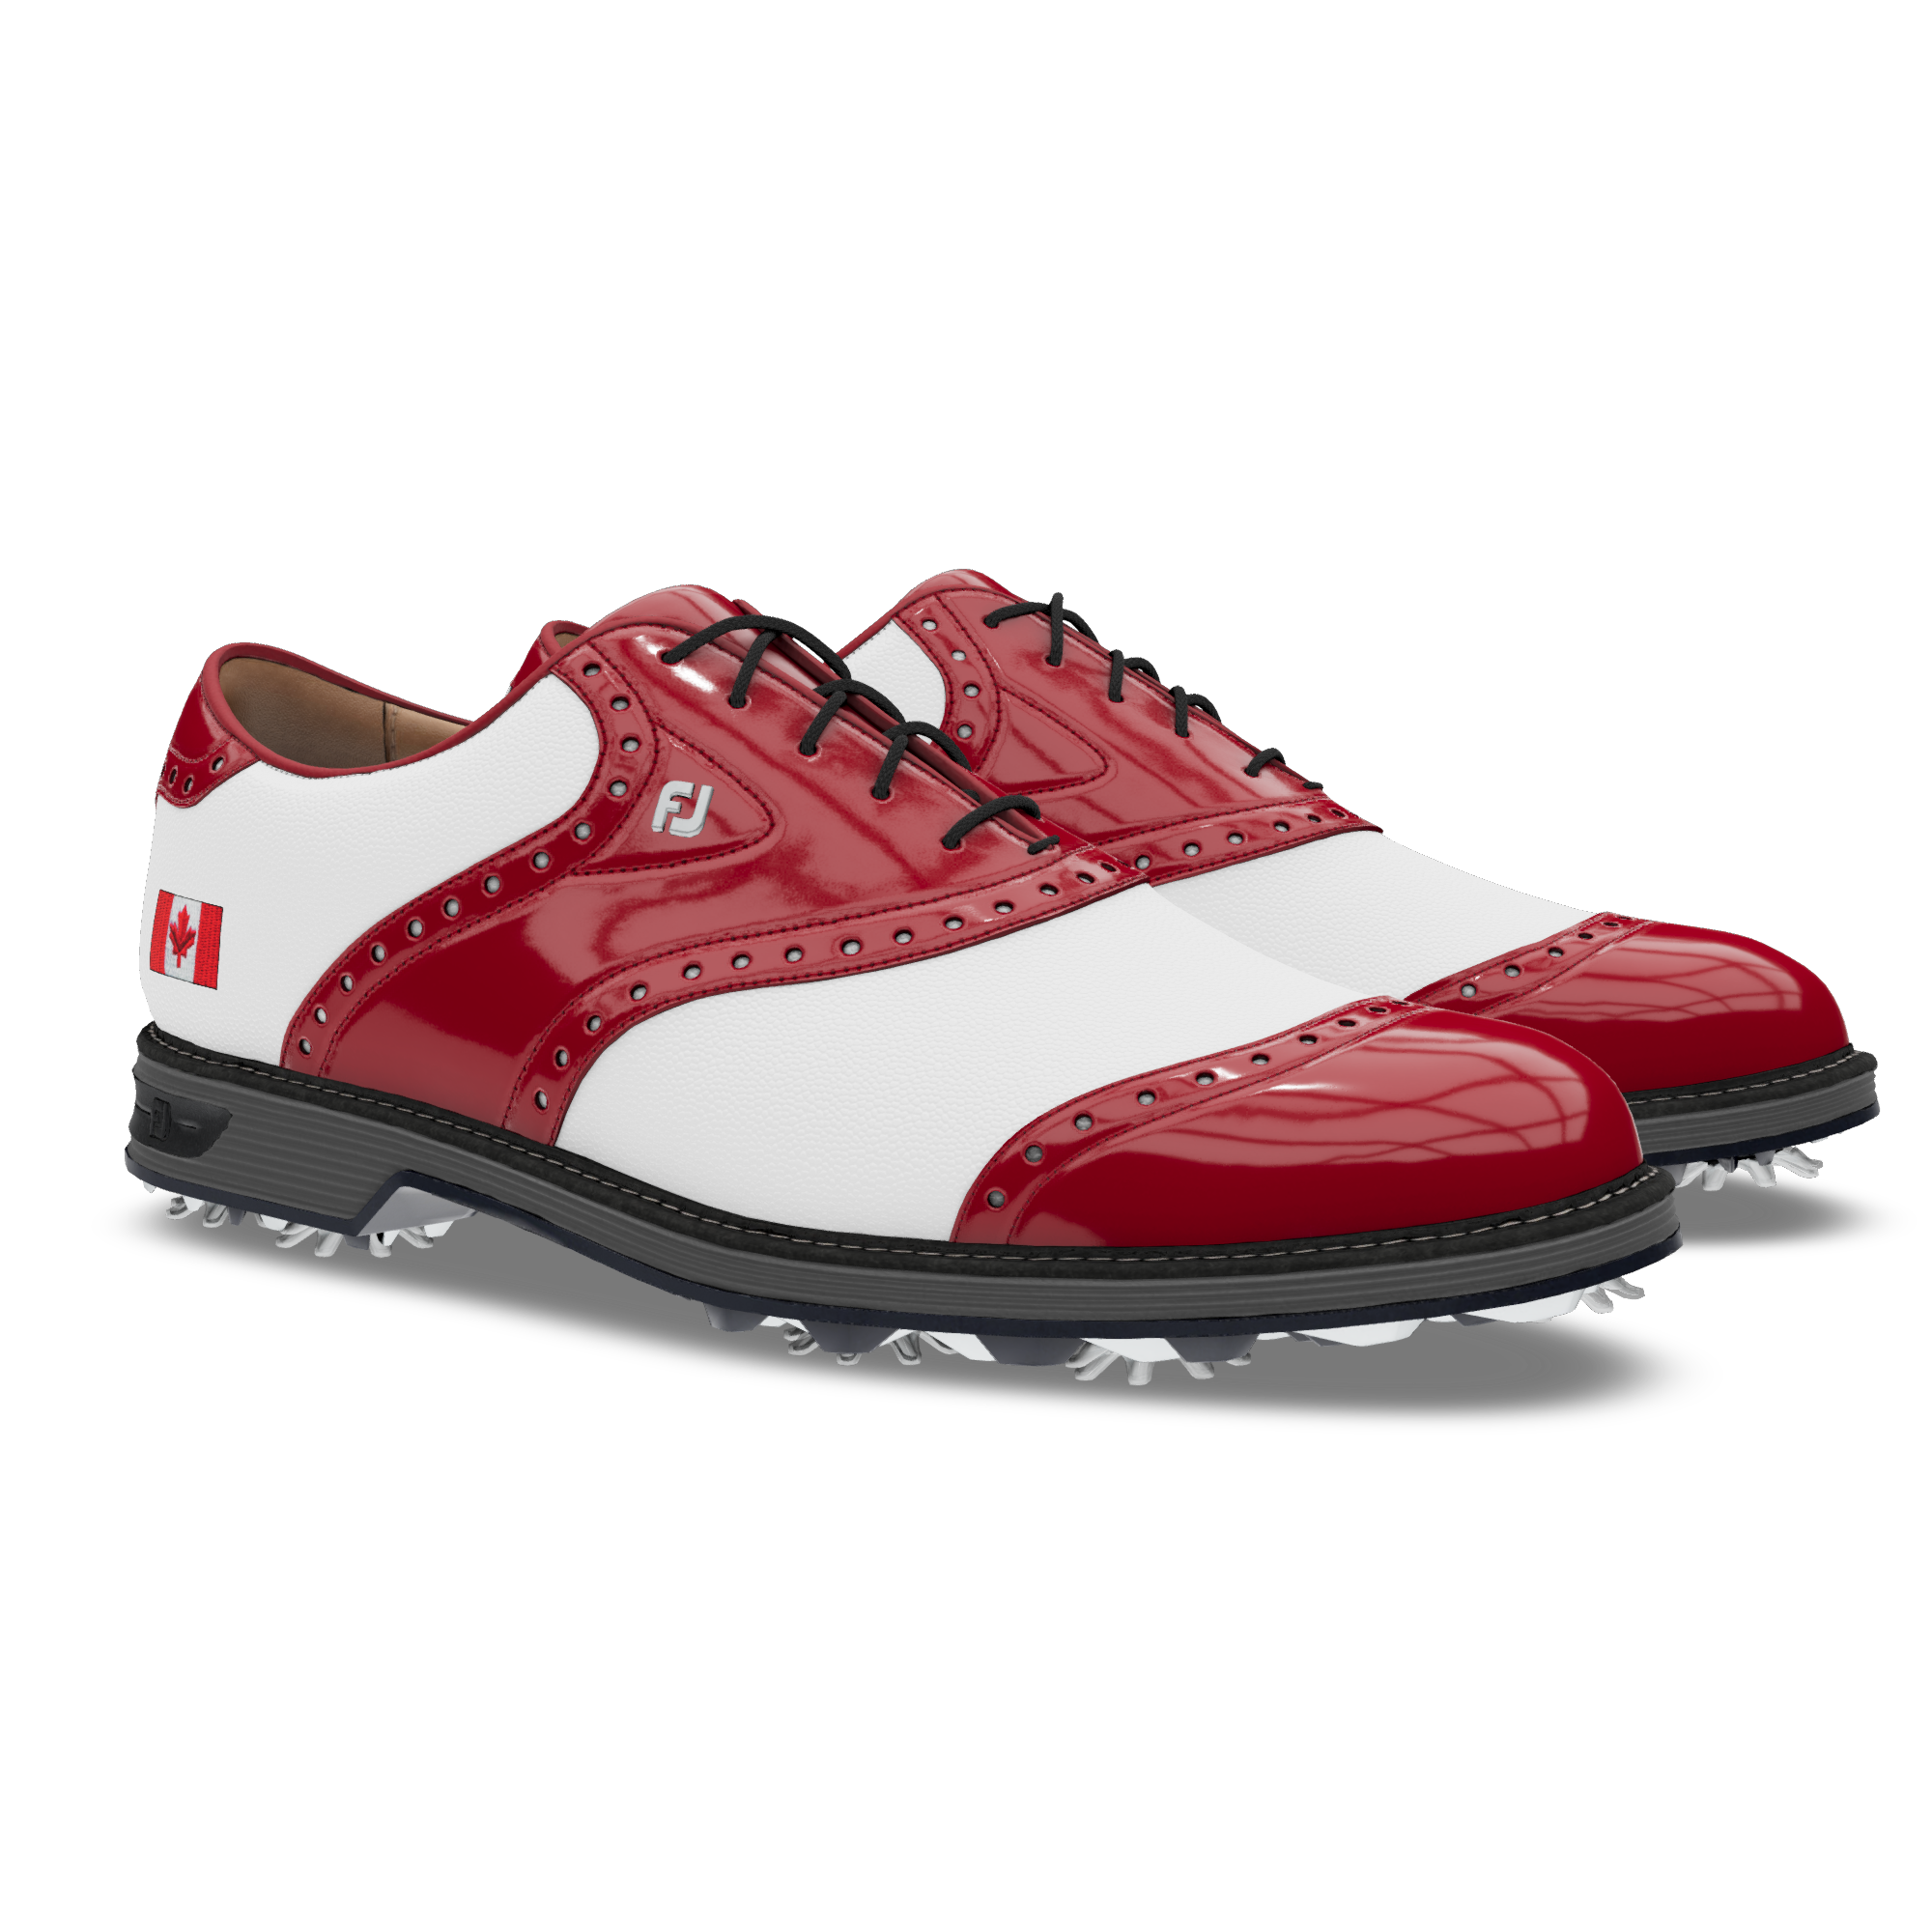 Men's Golf Shoes: Shop the #1 Shoe in Golf